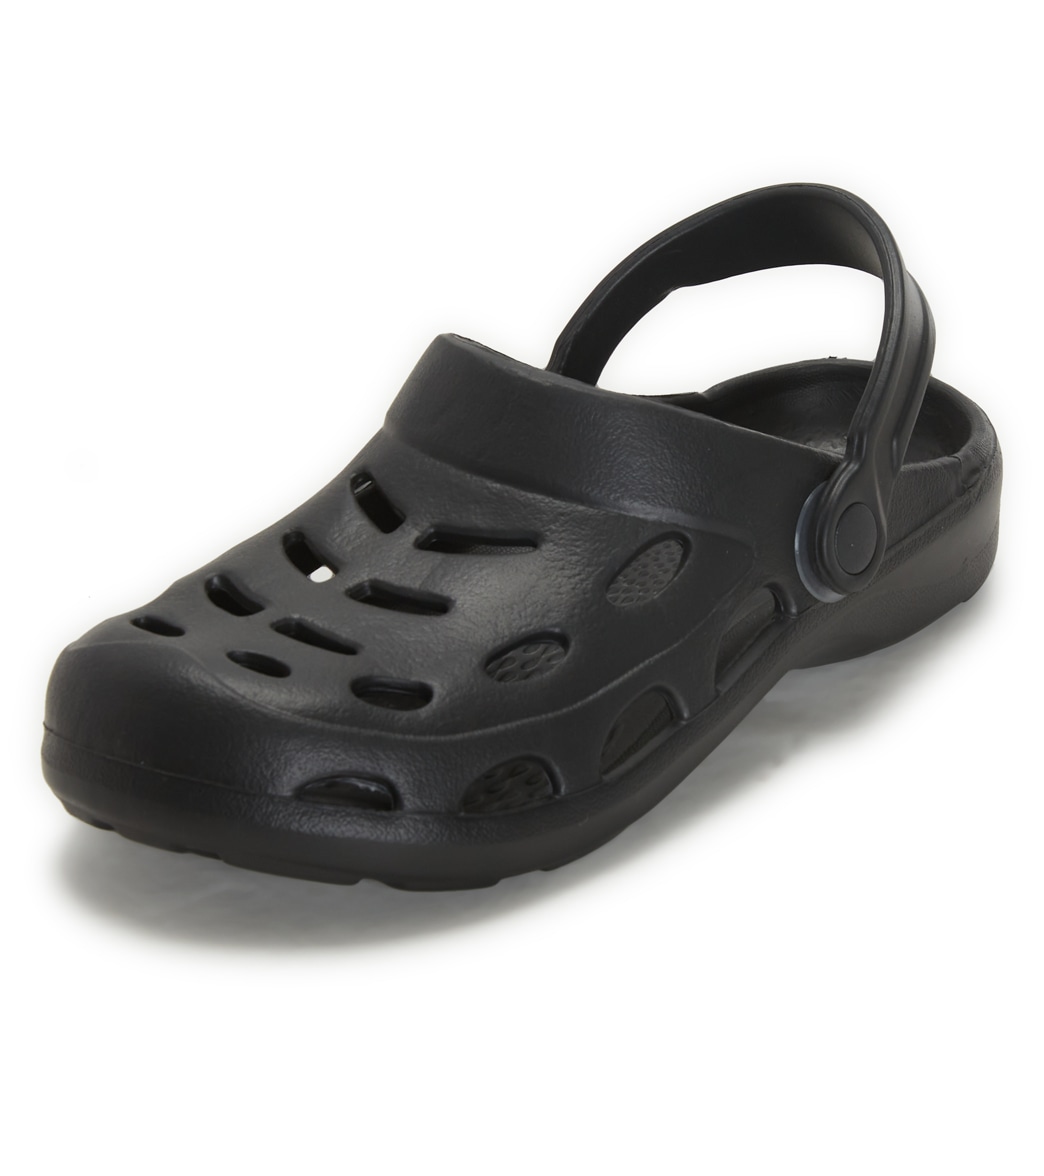 Northside Women's Haven Slip On Shoes Shoes Waterproof Shoes - Black 060 - Swimoutlet.com